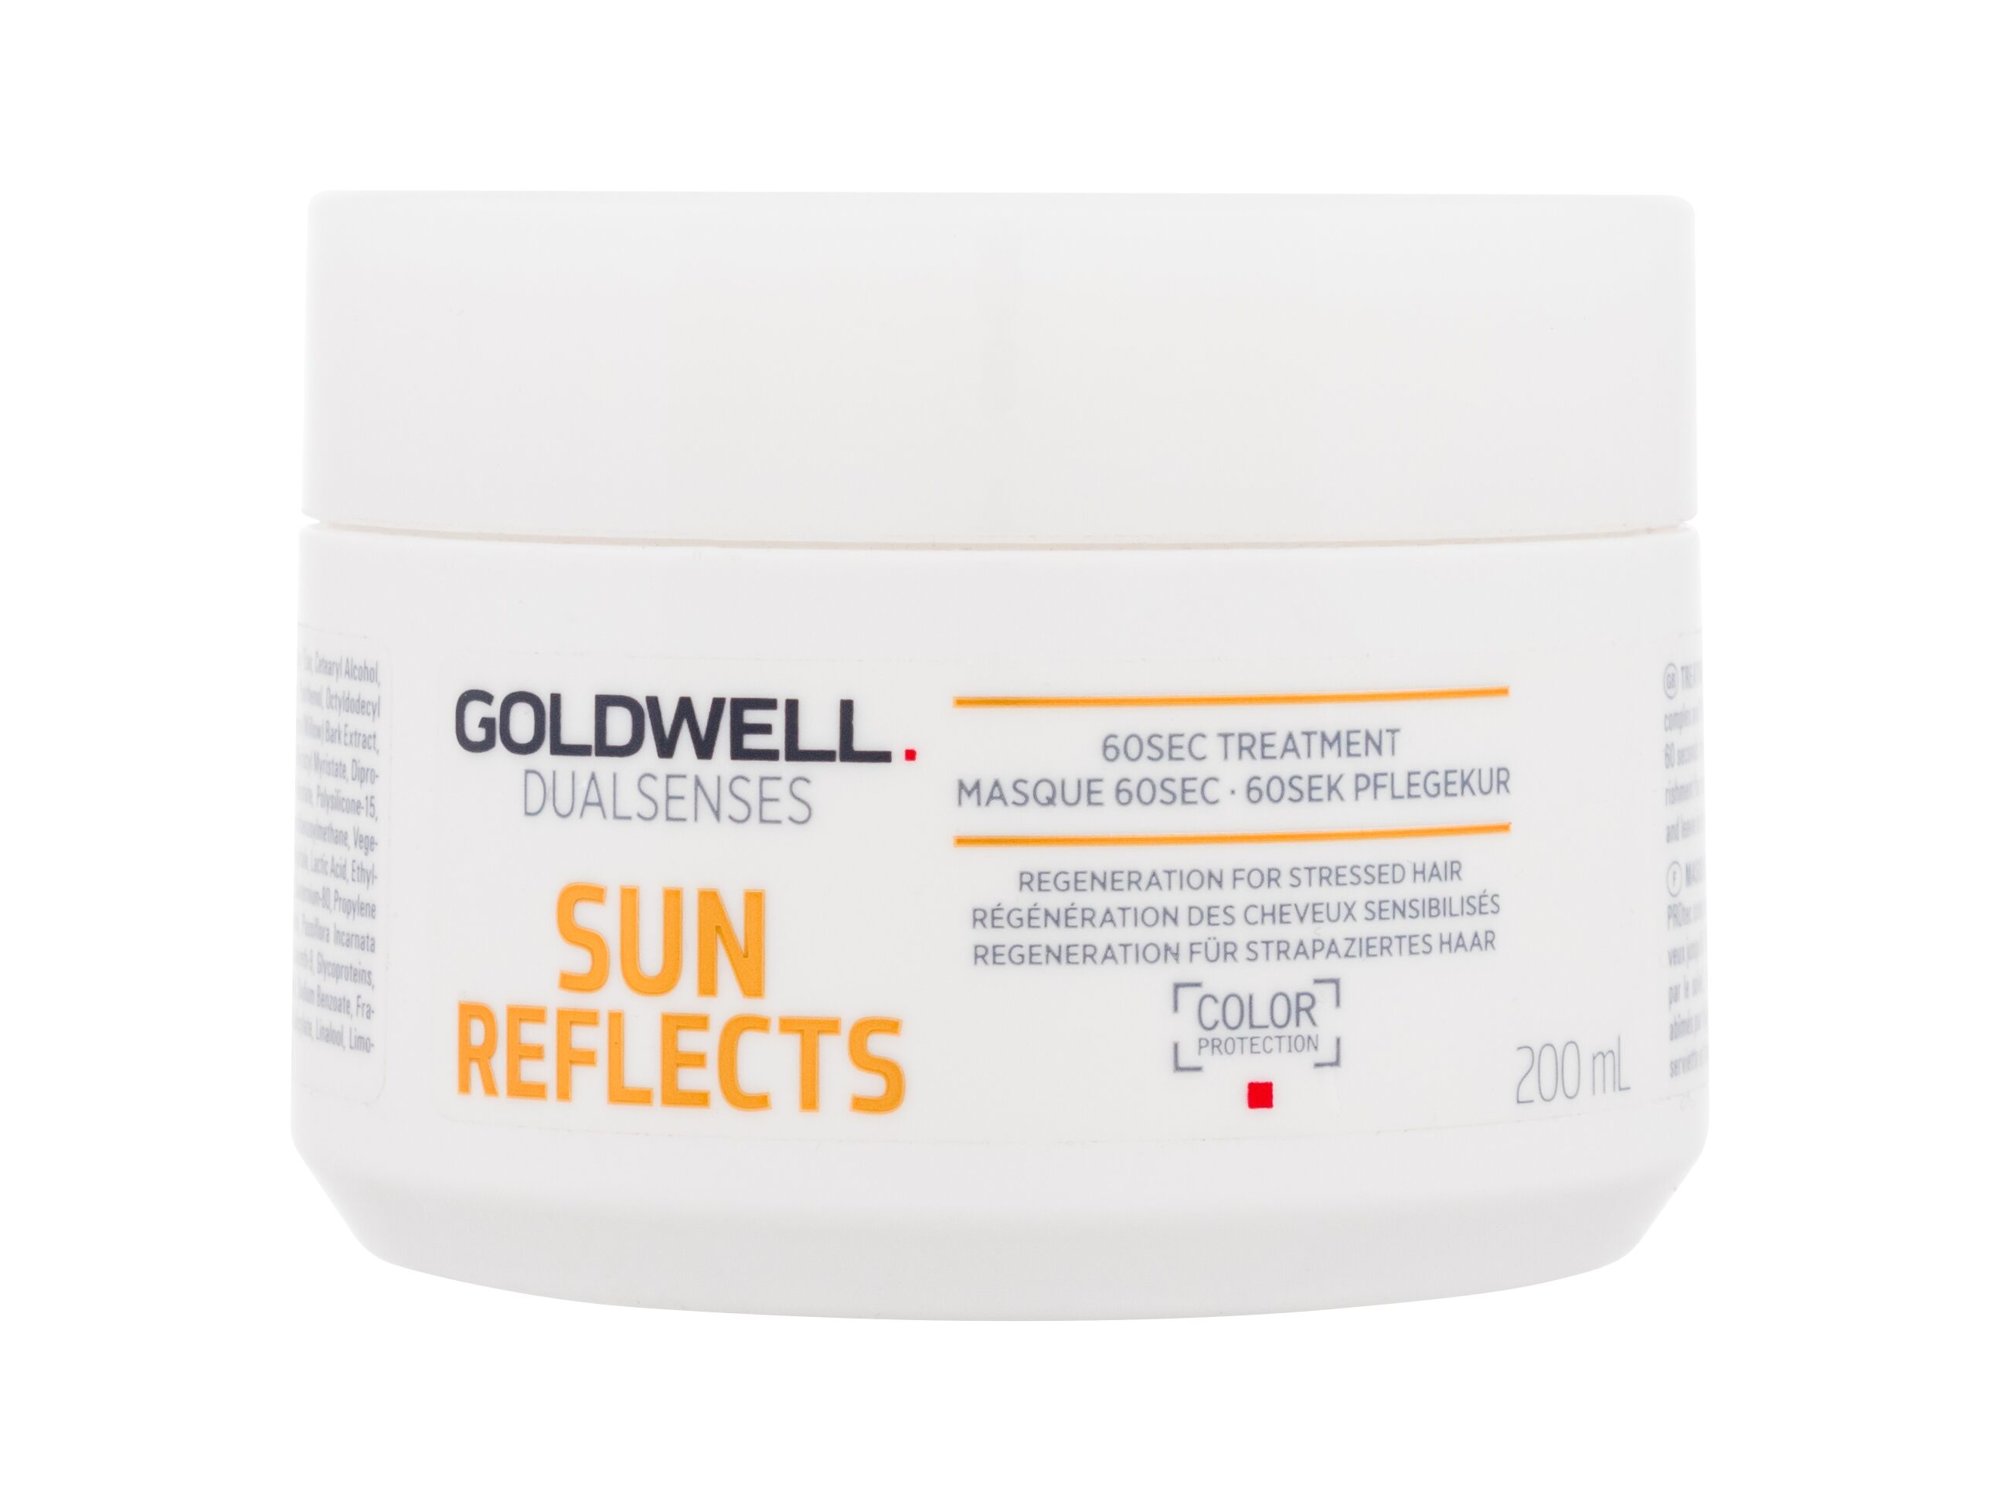 Goldwell Dualsenses Sun Reflects 60Sec Treatment plaukų kaukė